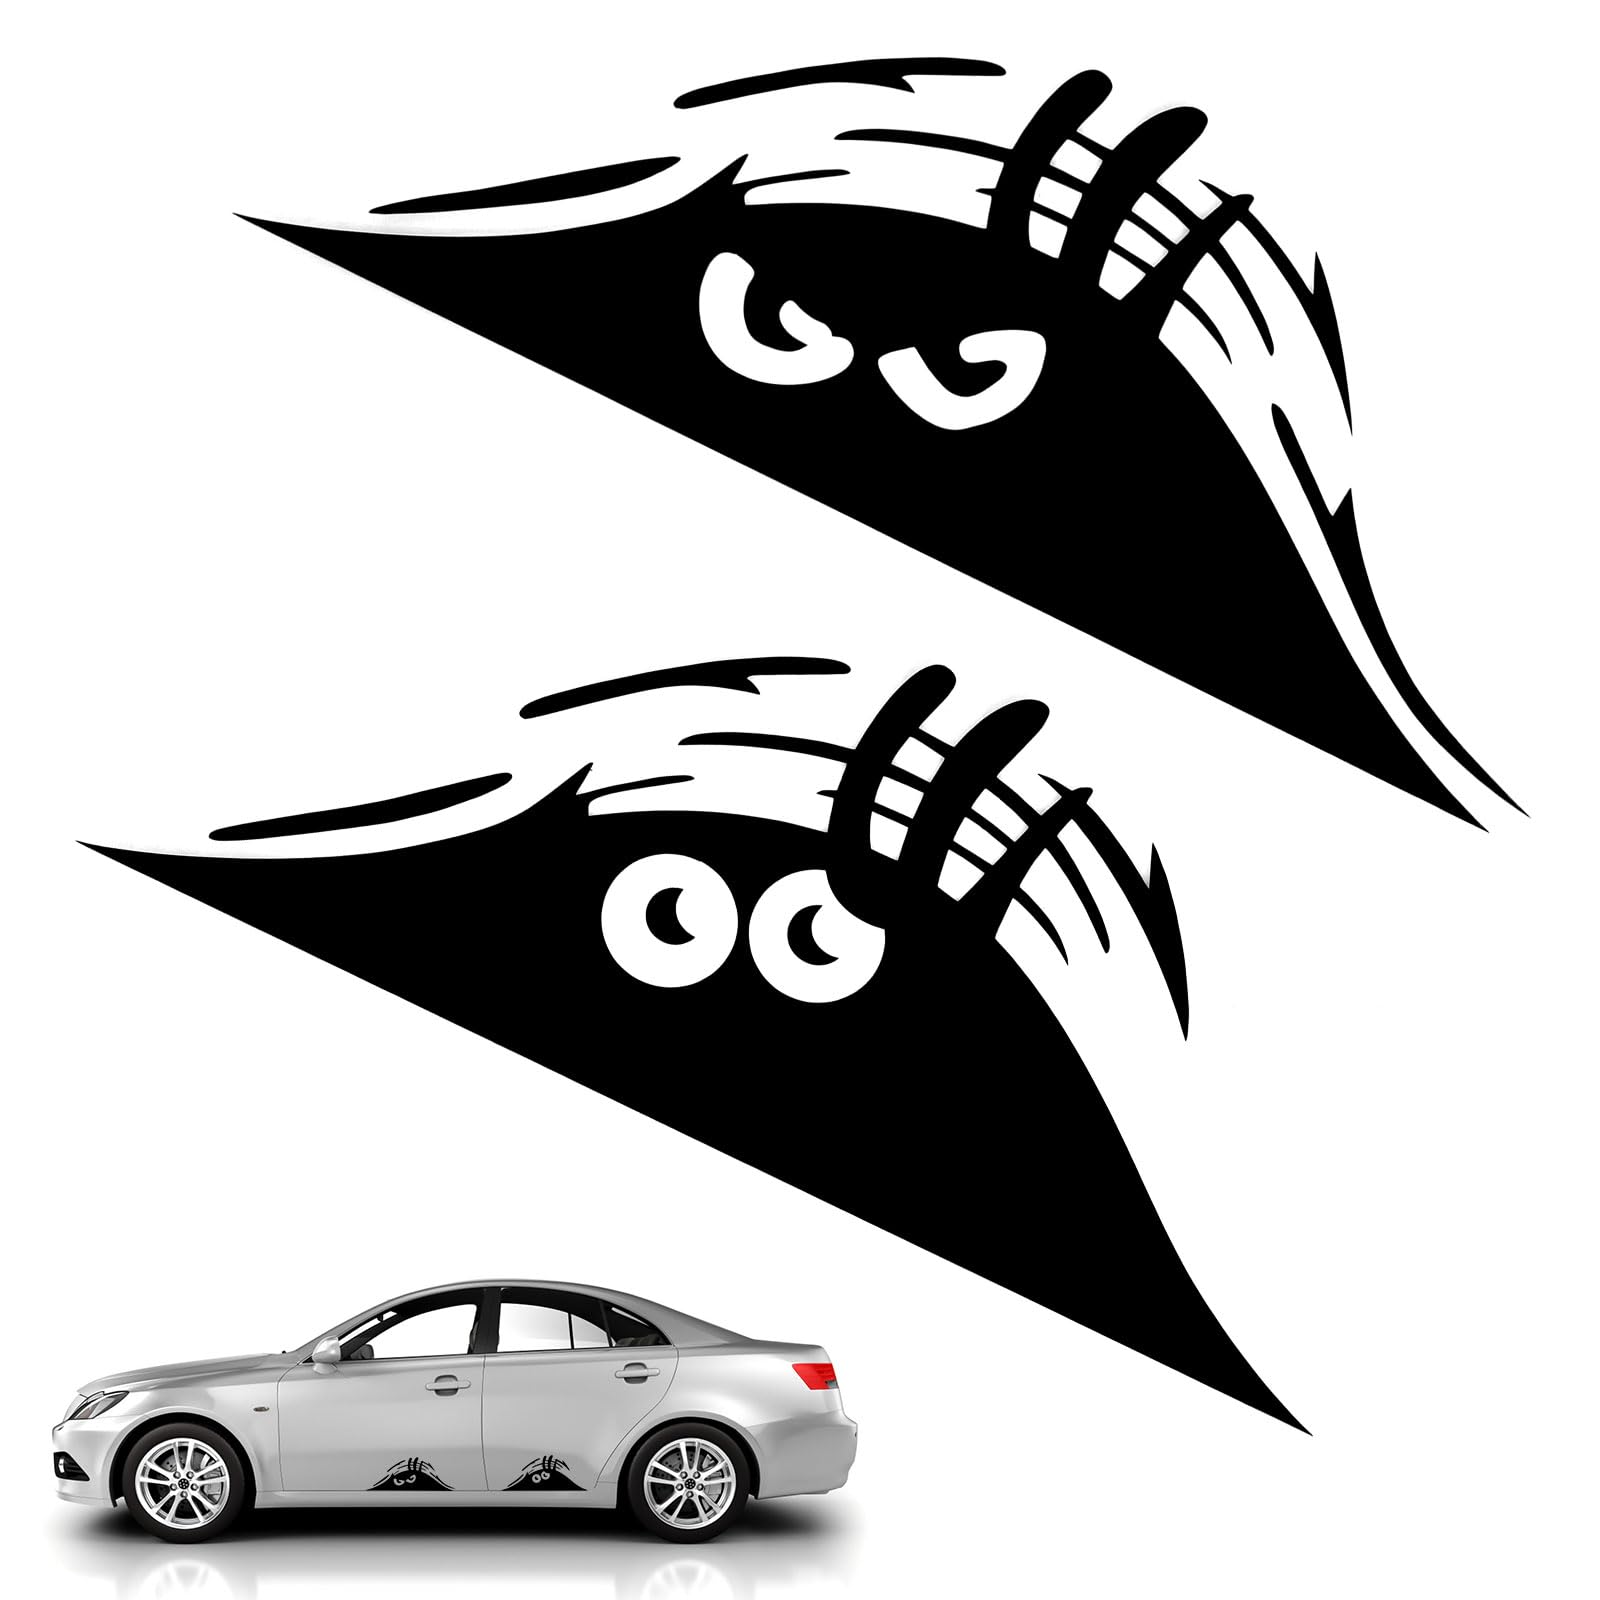 HoaaiGo 2 Stück 3D Peeking Monster Aufkleber Sticker Car Decals Peeking Monster Scary Eyes Autoaufkleber Wasserdichter Autoaufkleber Smile and Anger Car Stickers Geeignet für Karosserie, Autofenster von HoaaiGo